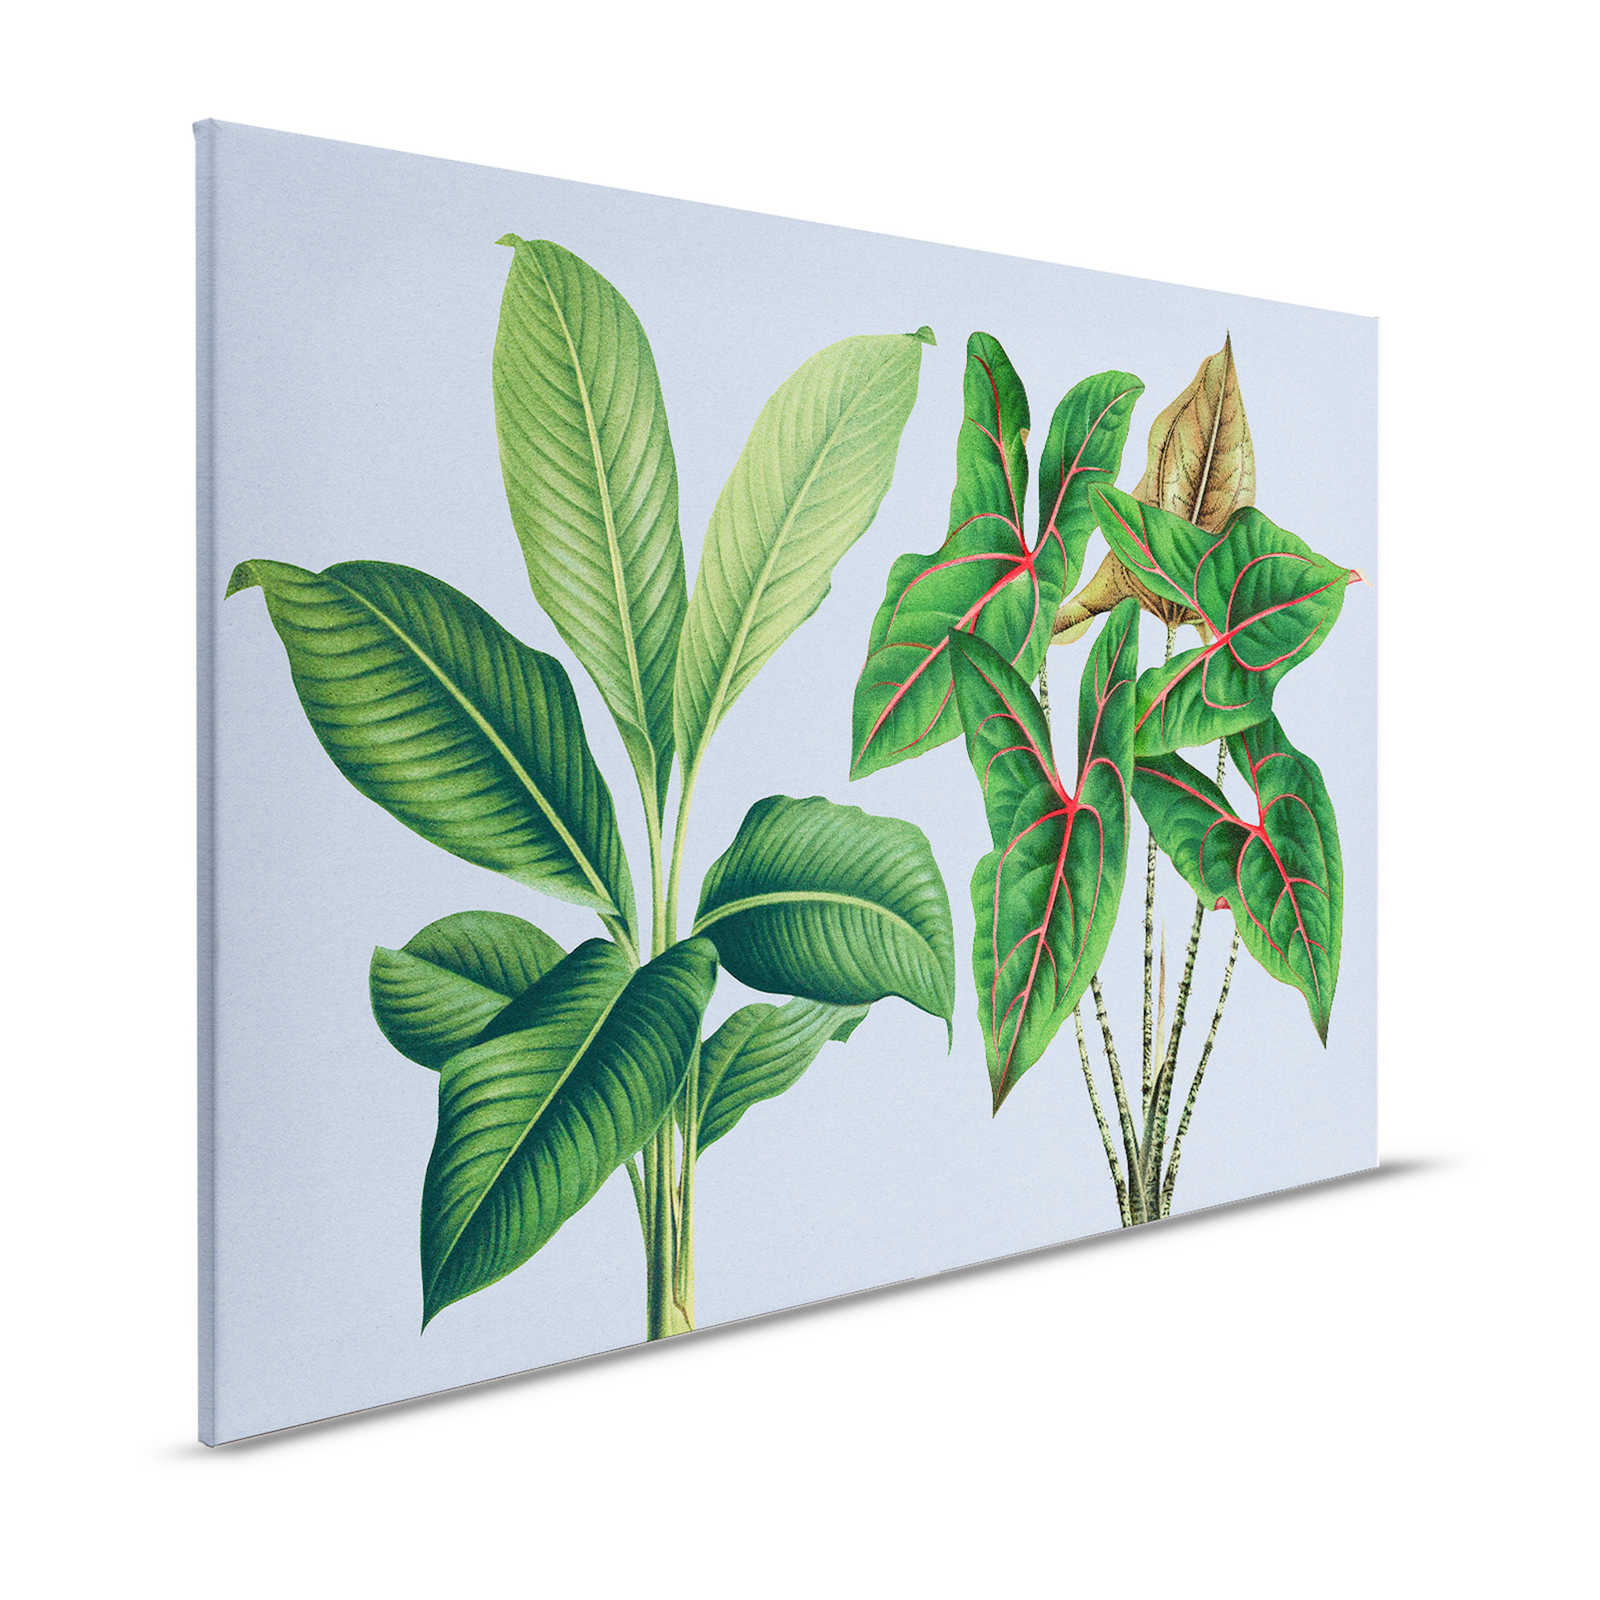 Leaf Garden 1 - Bladeren Canvas schilderij Blauw met tropische planten - 1.20 m x 0.80 m
